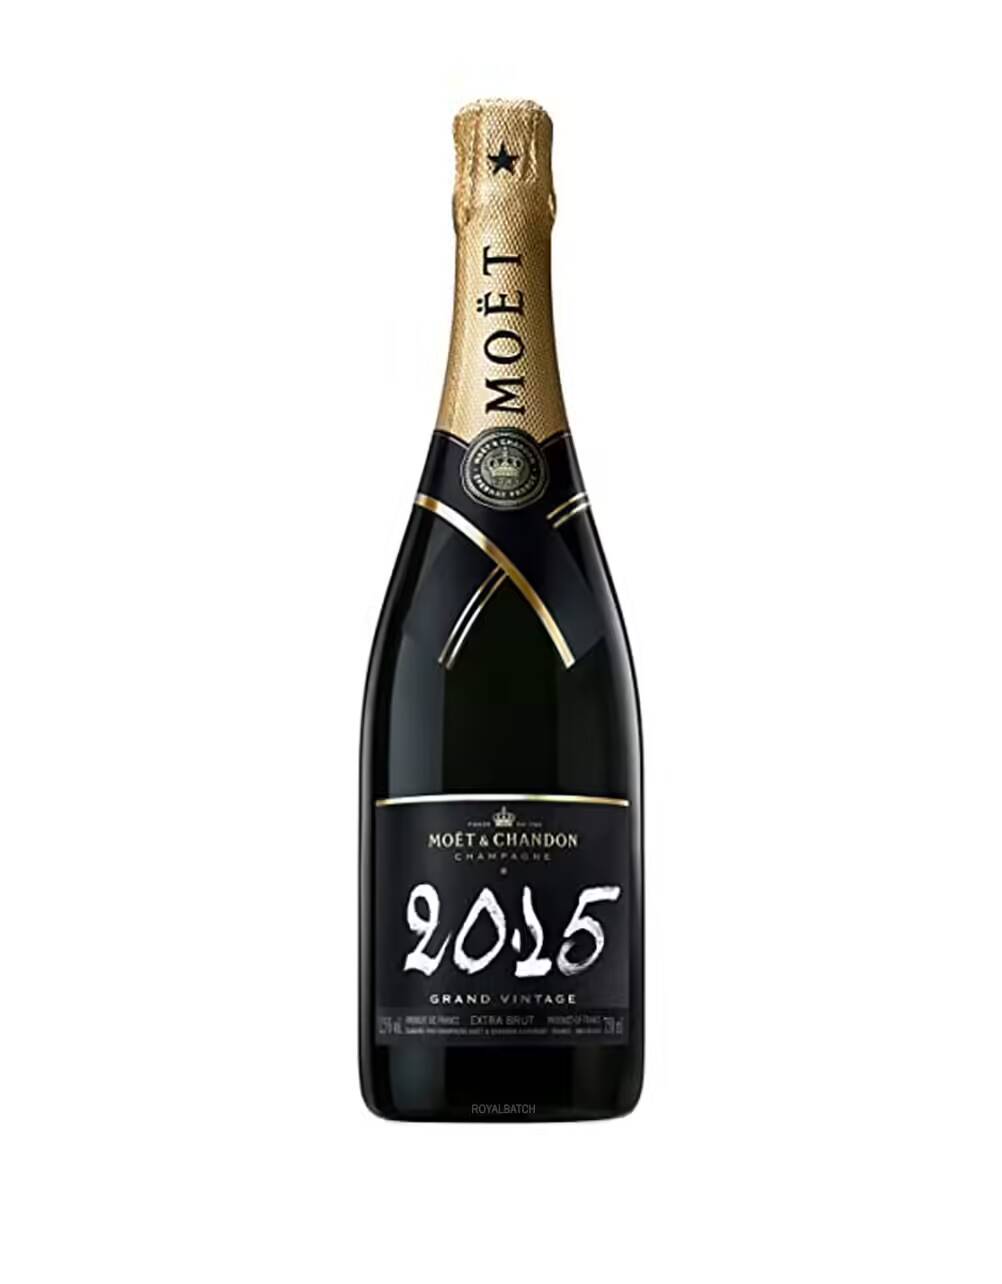 Moet and Chandon Grand Vintage 2015 champagne Brut